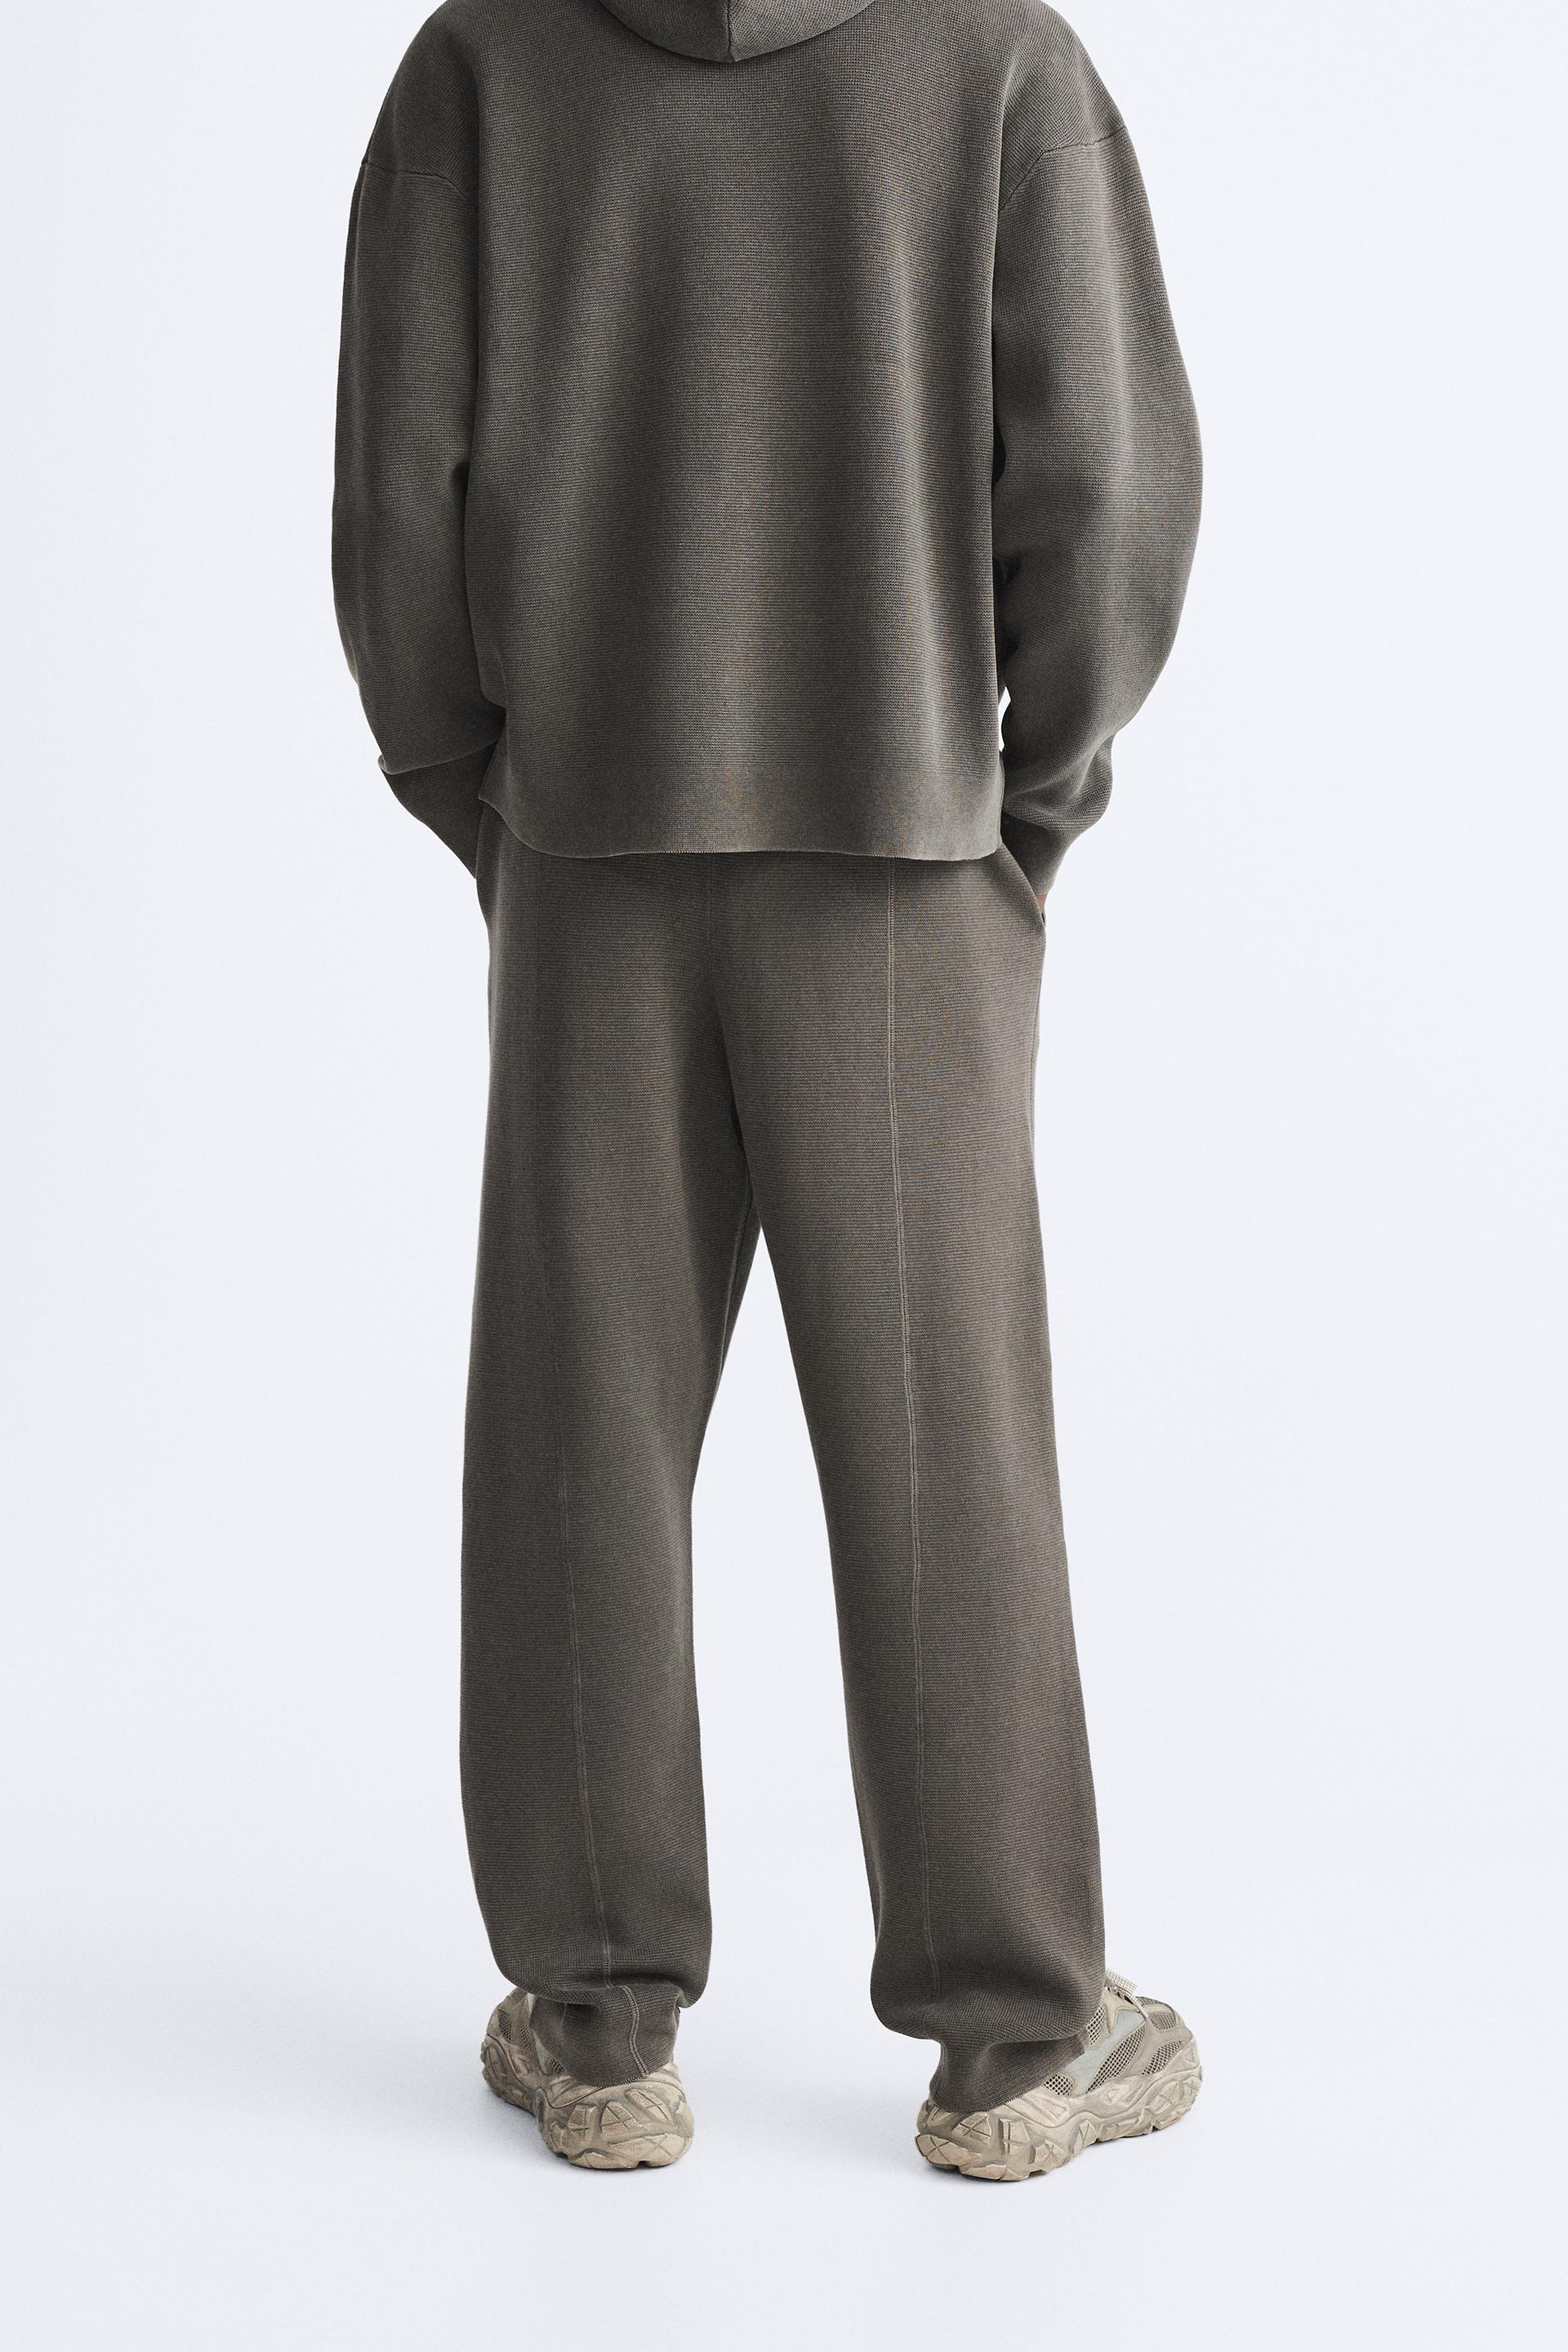 Departwest Jersey Knit Jogger Sweatpant - Men's Pants in Lt Grey